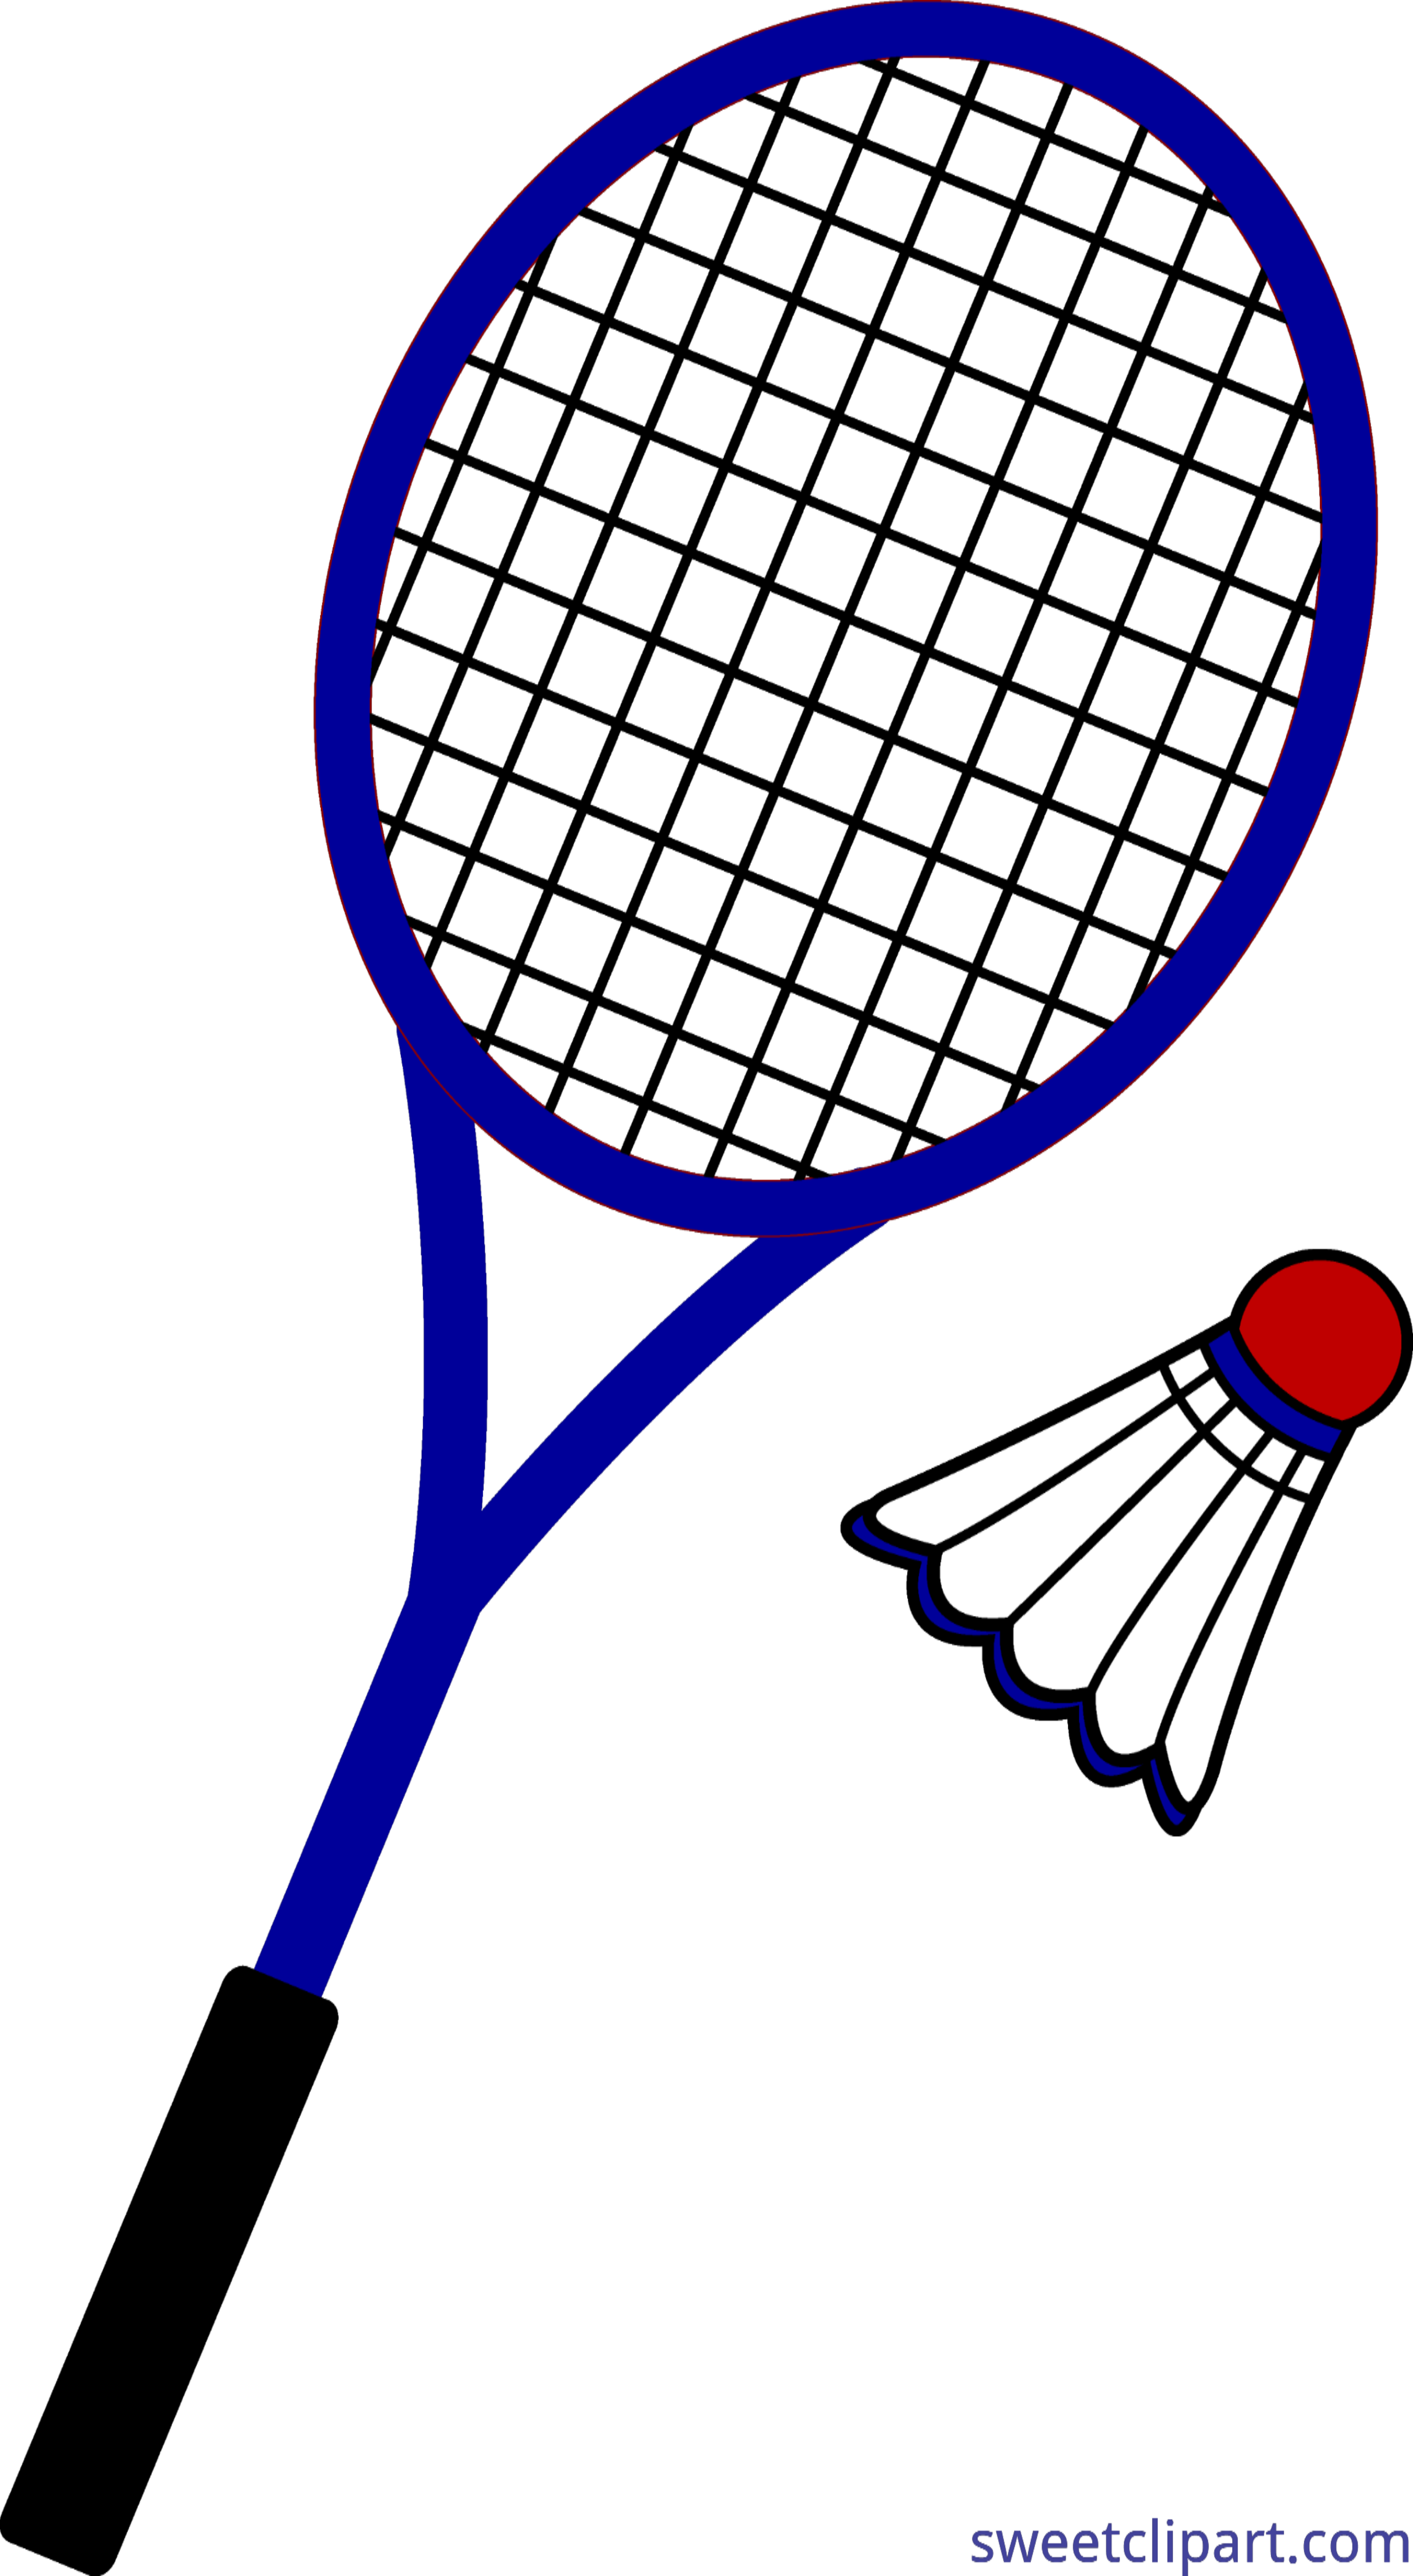 Badminton Racketand Shuttlecock Illustration